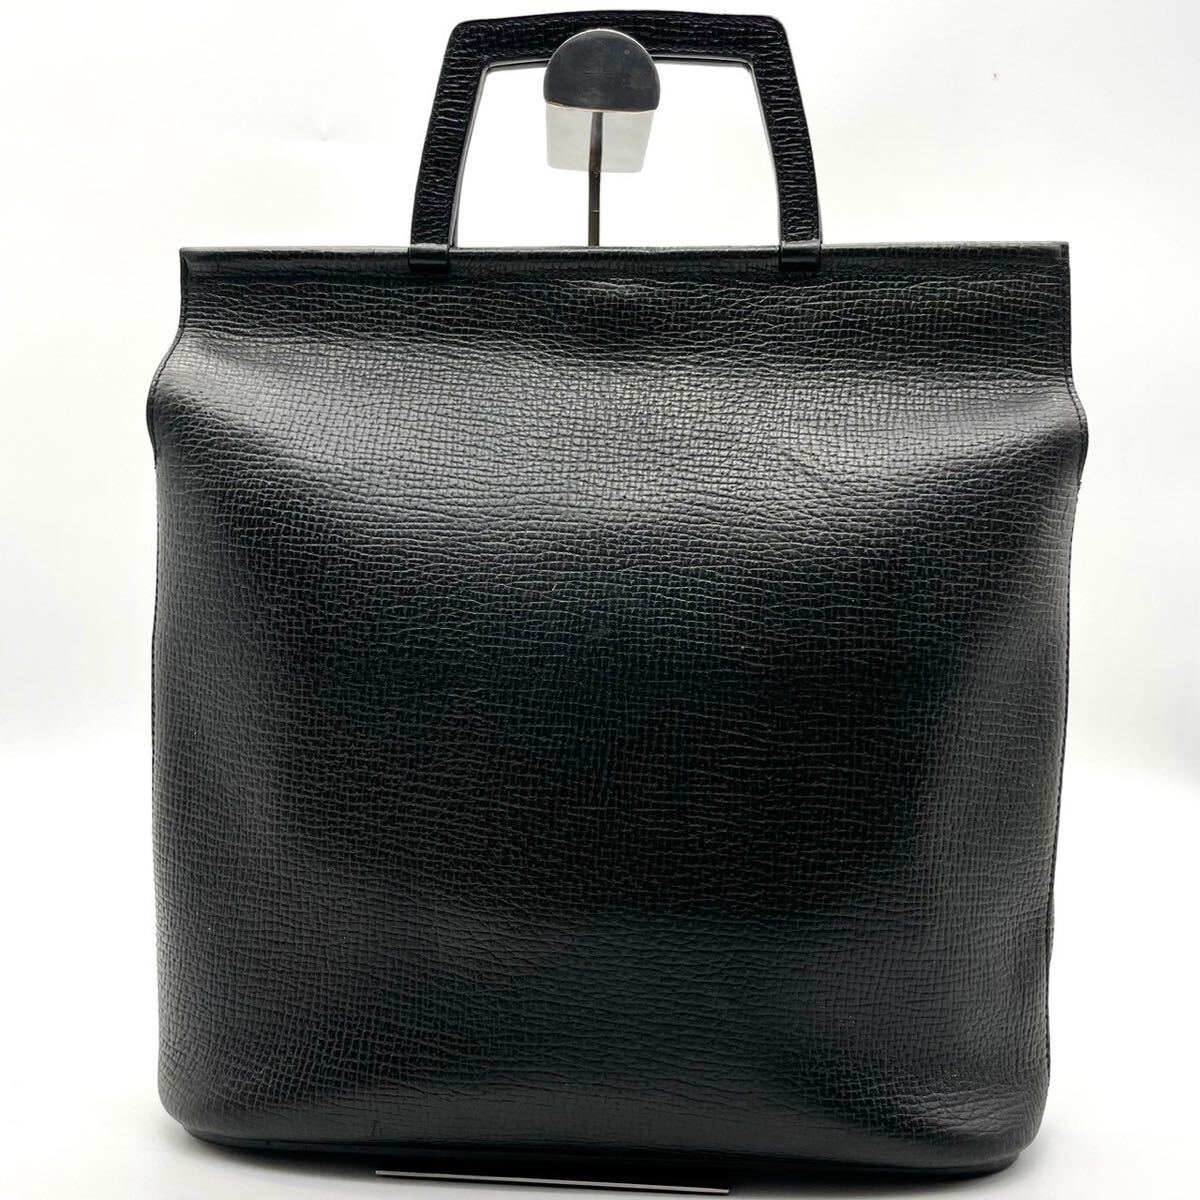  ultimate beautiful goods Loewe LOEWE men's business tote bag briefcase black black leather original leather A4 storage Logo type pushed . commuting work bag bag 